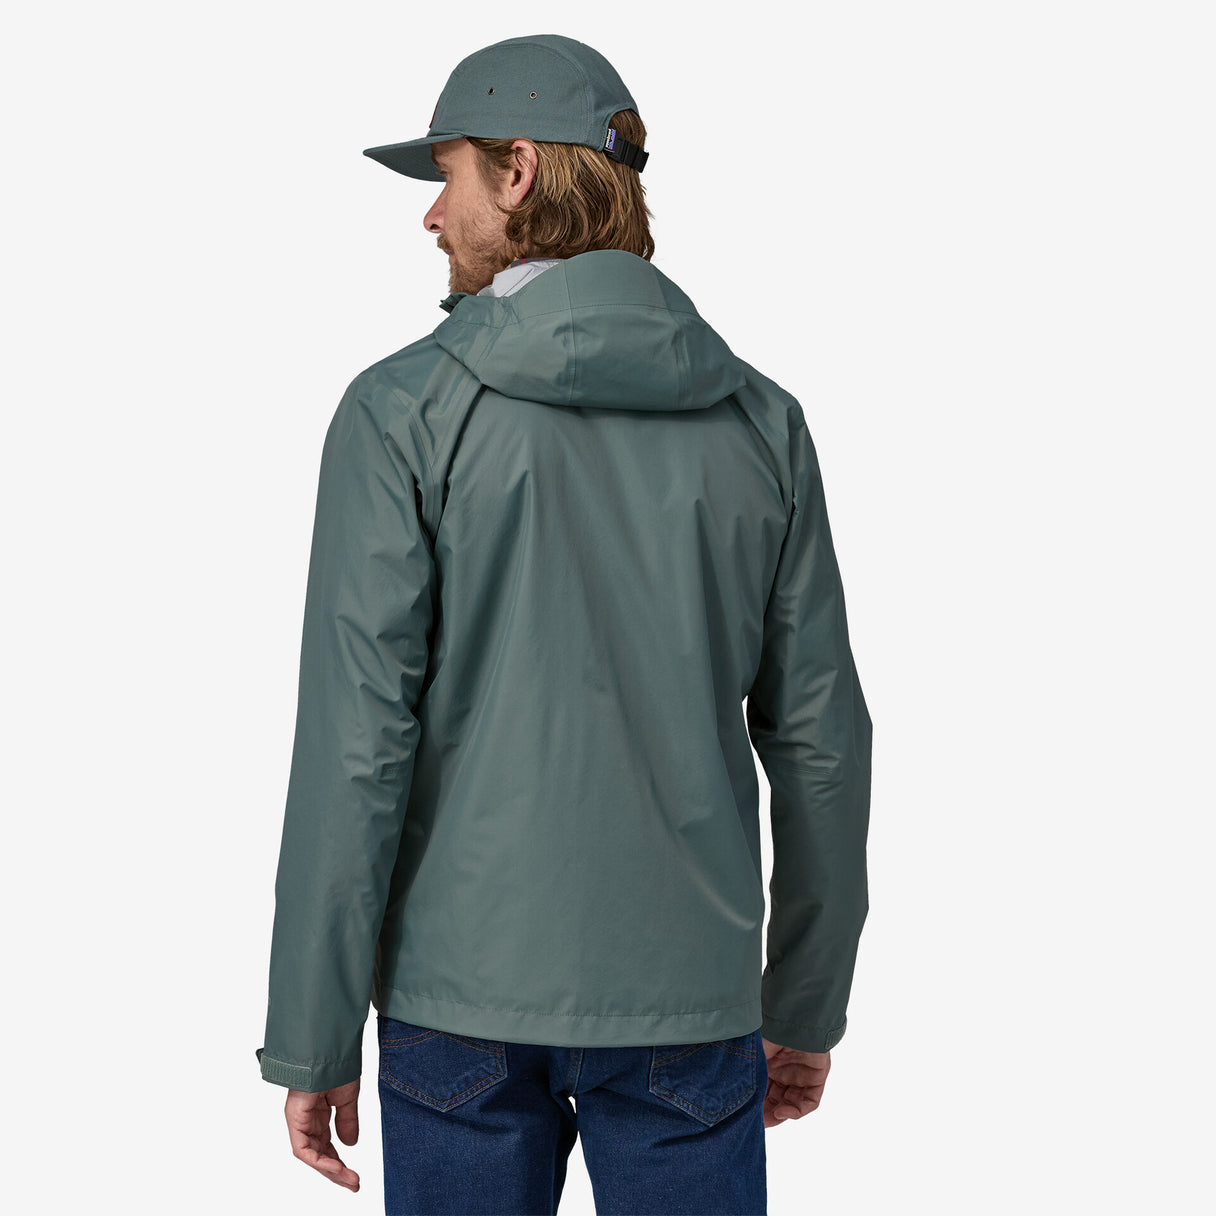 Patagonia Men's Torrentshell 3L Jacket - Nouveau Green, L